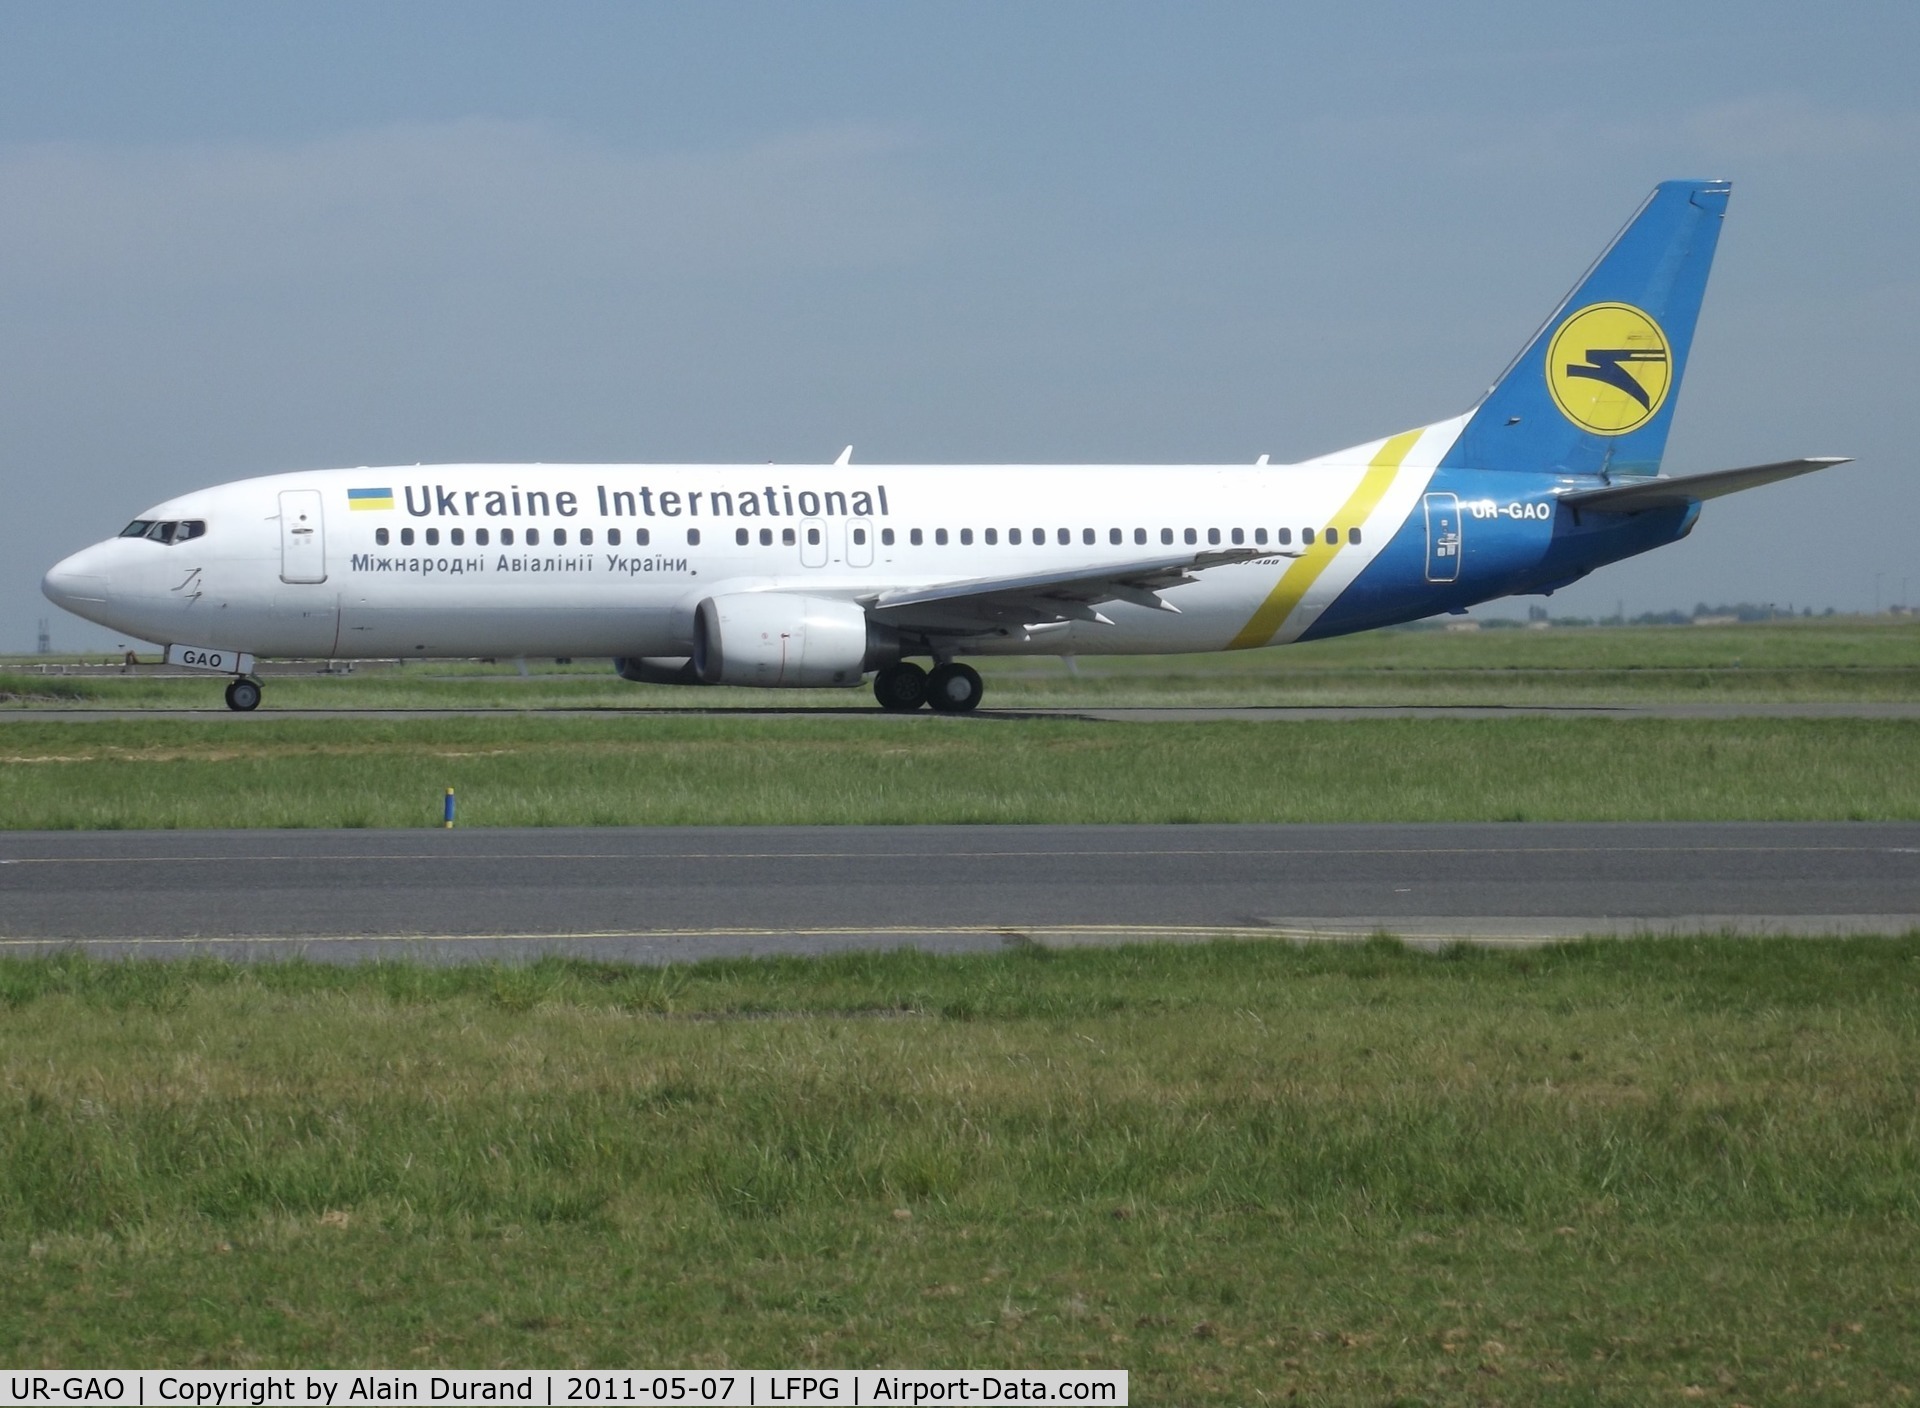 UR-GAO, 1991 Boeing 737-4Z9 C/N 25147, c/n 2043 previously served Lauda Air, Afriqiyah and Alisea all as OE-LNH before landing in Ukraine in 2004